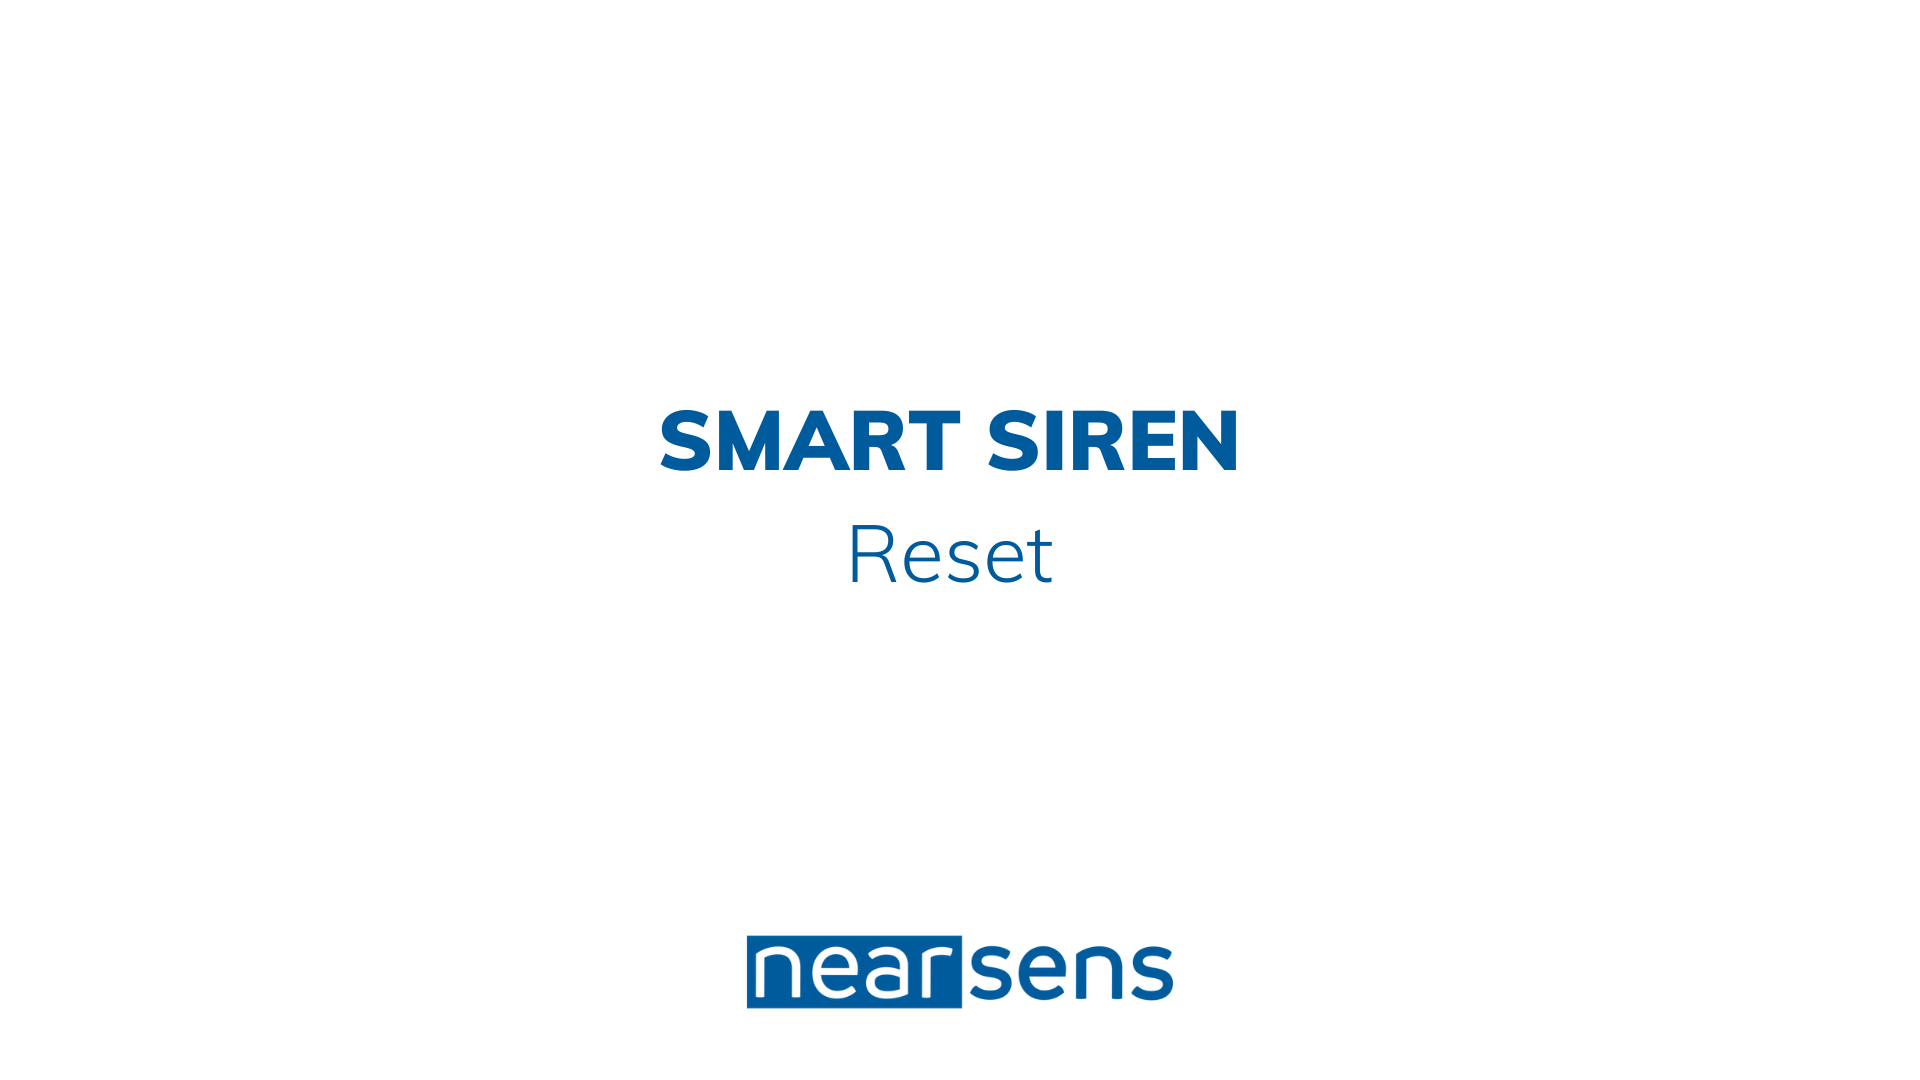 nearsens smart siren reset